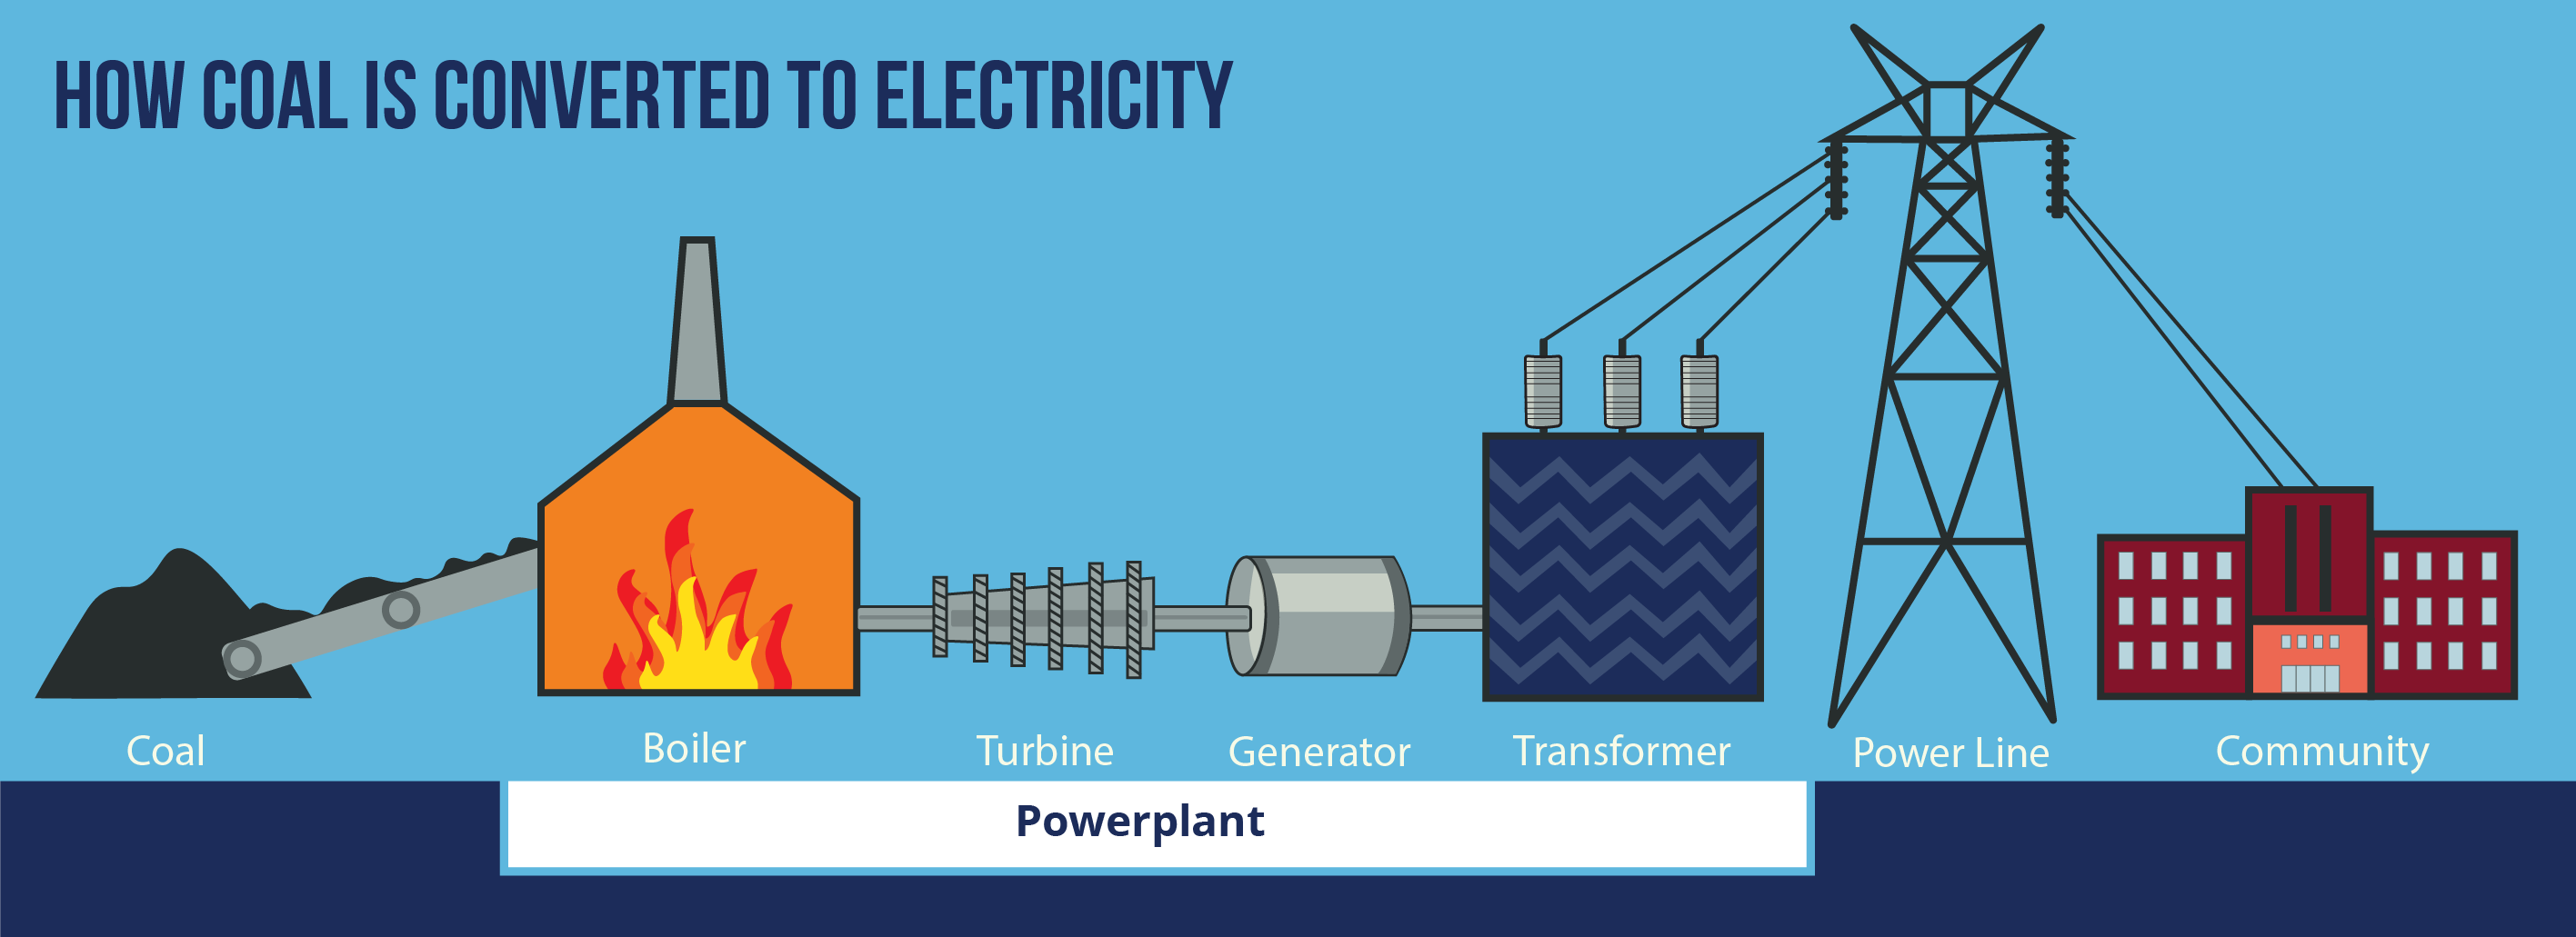 HOW COAL IS CONVERTED TO ELECTRICITY. COAL, BOILER, TURBINE, GENERATOR, TRANSFORMER, POWERLINE, COMMUNITY, POWERPLANT